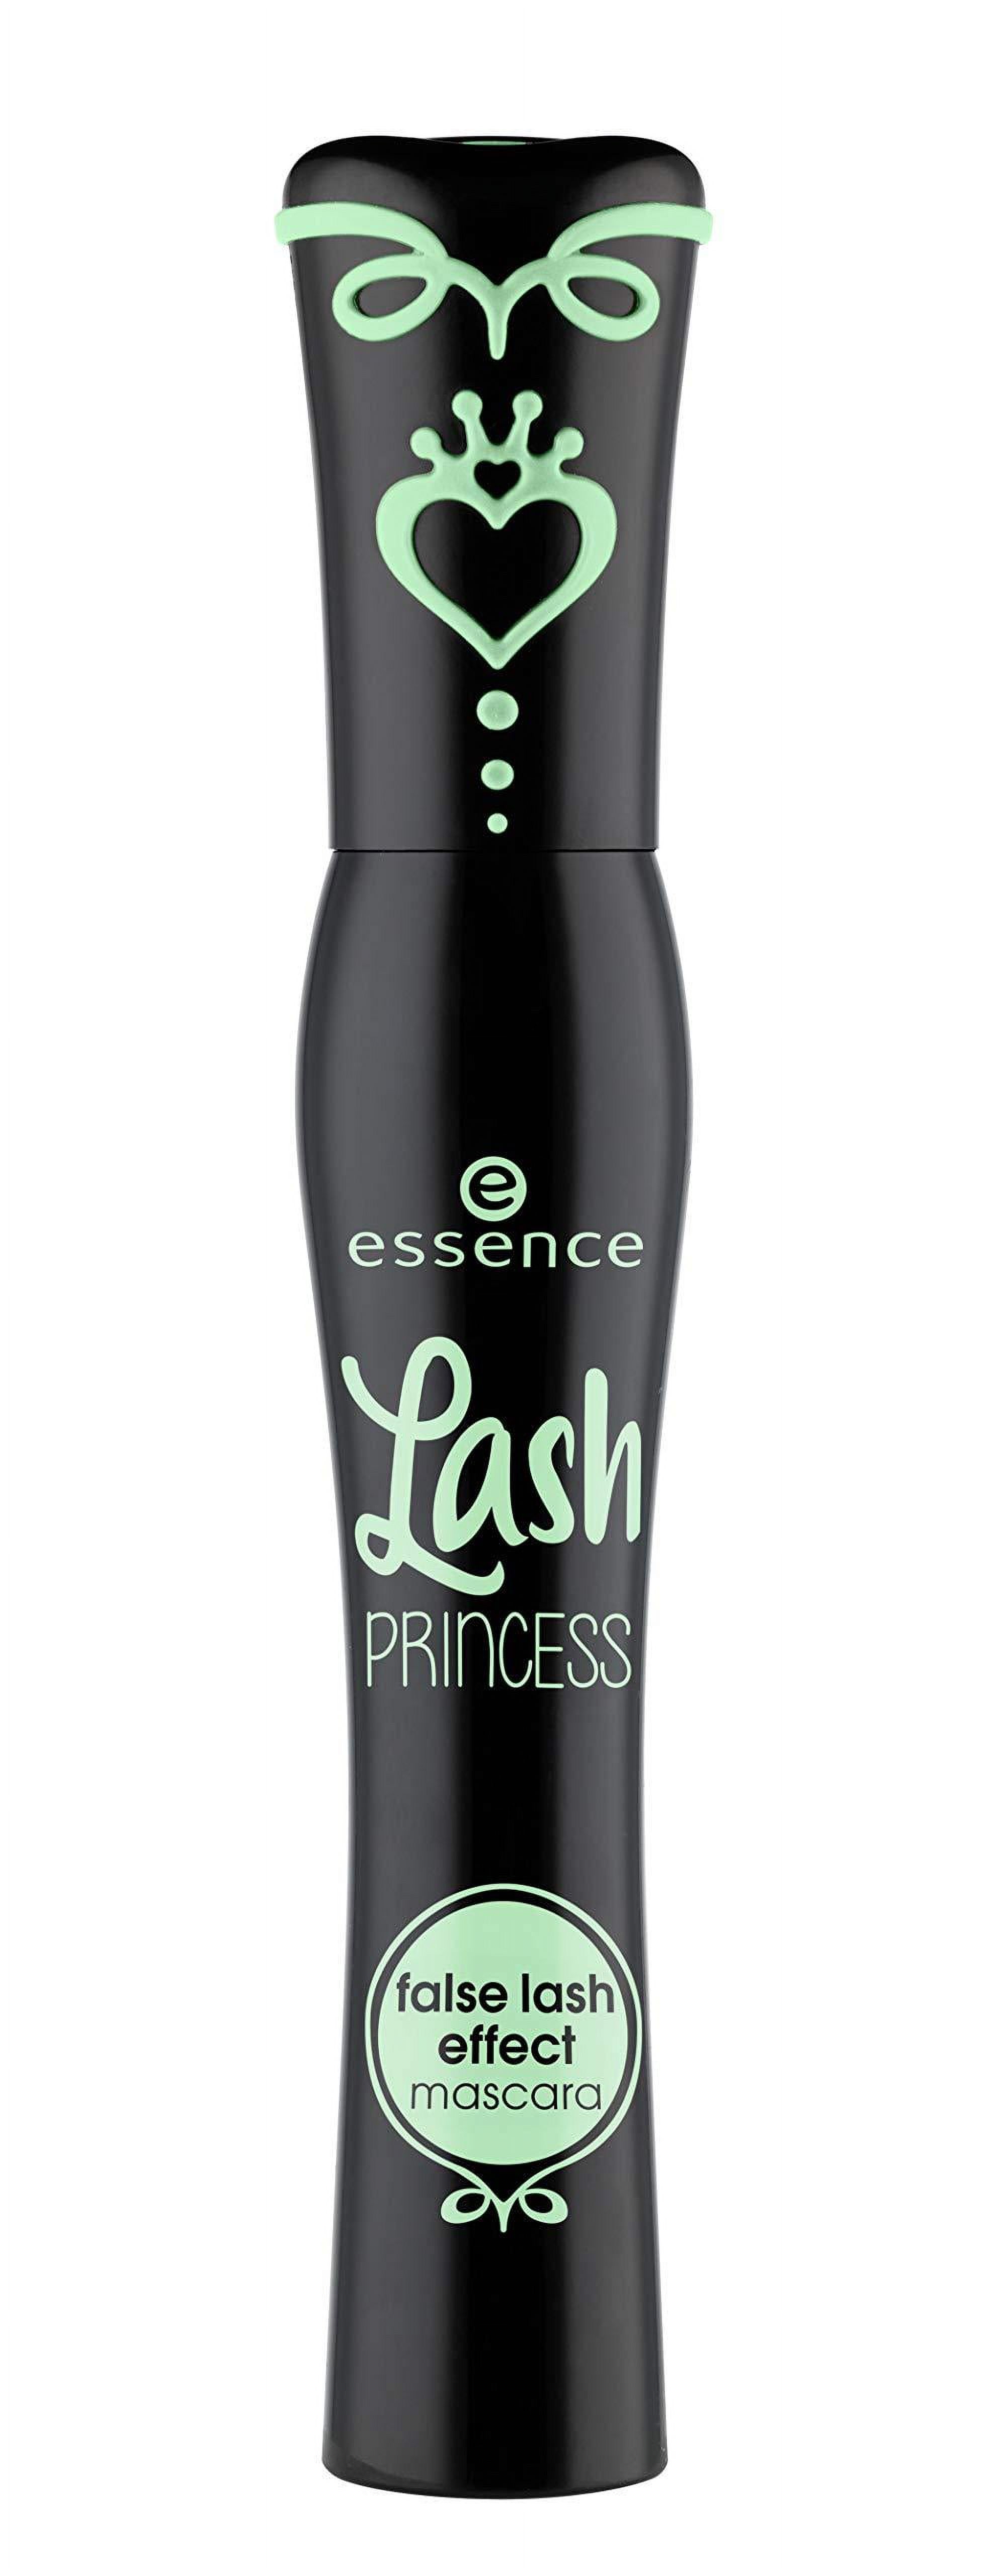 Essence Cosmetics Princess False Lash Effect Mascara, 1 Count - image 1 of 4